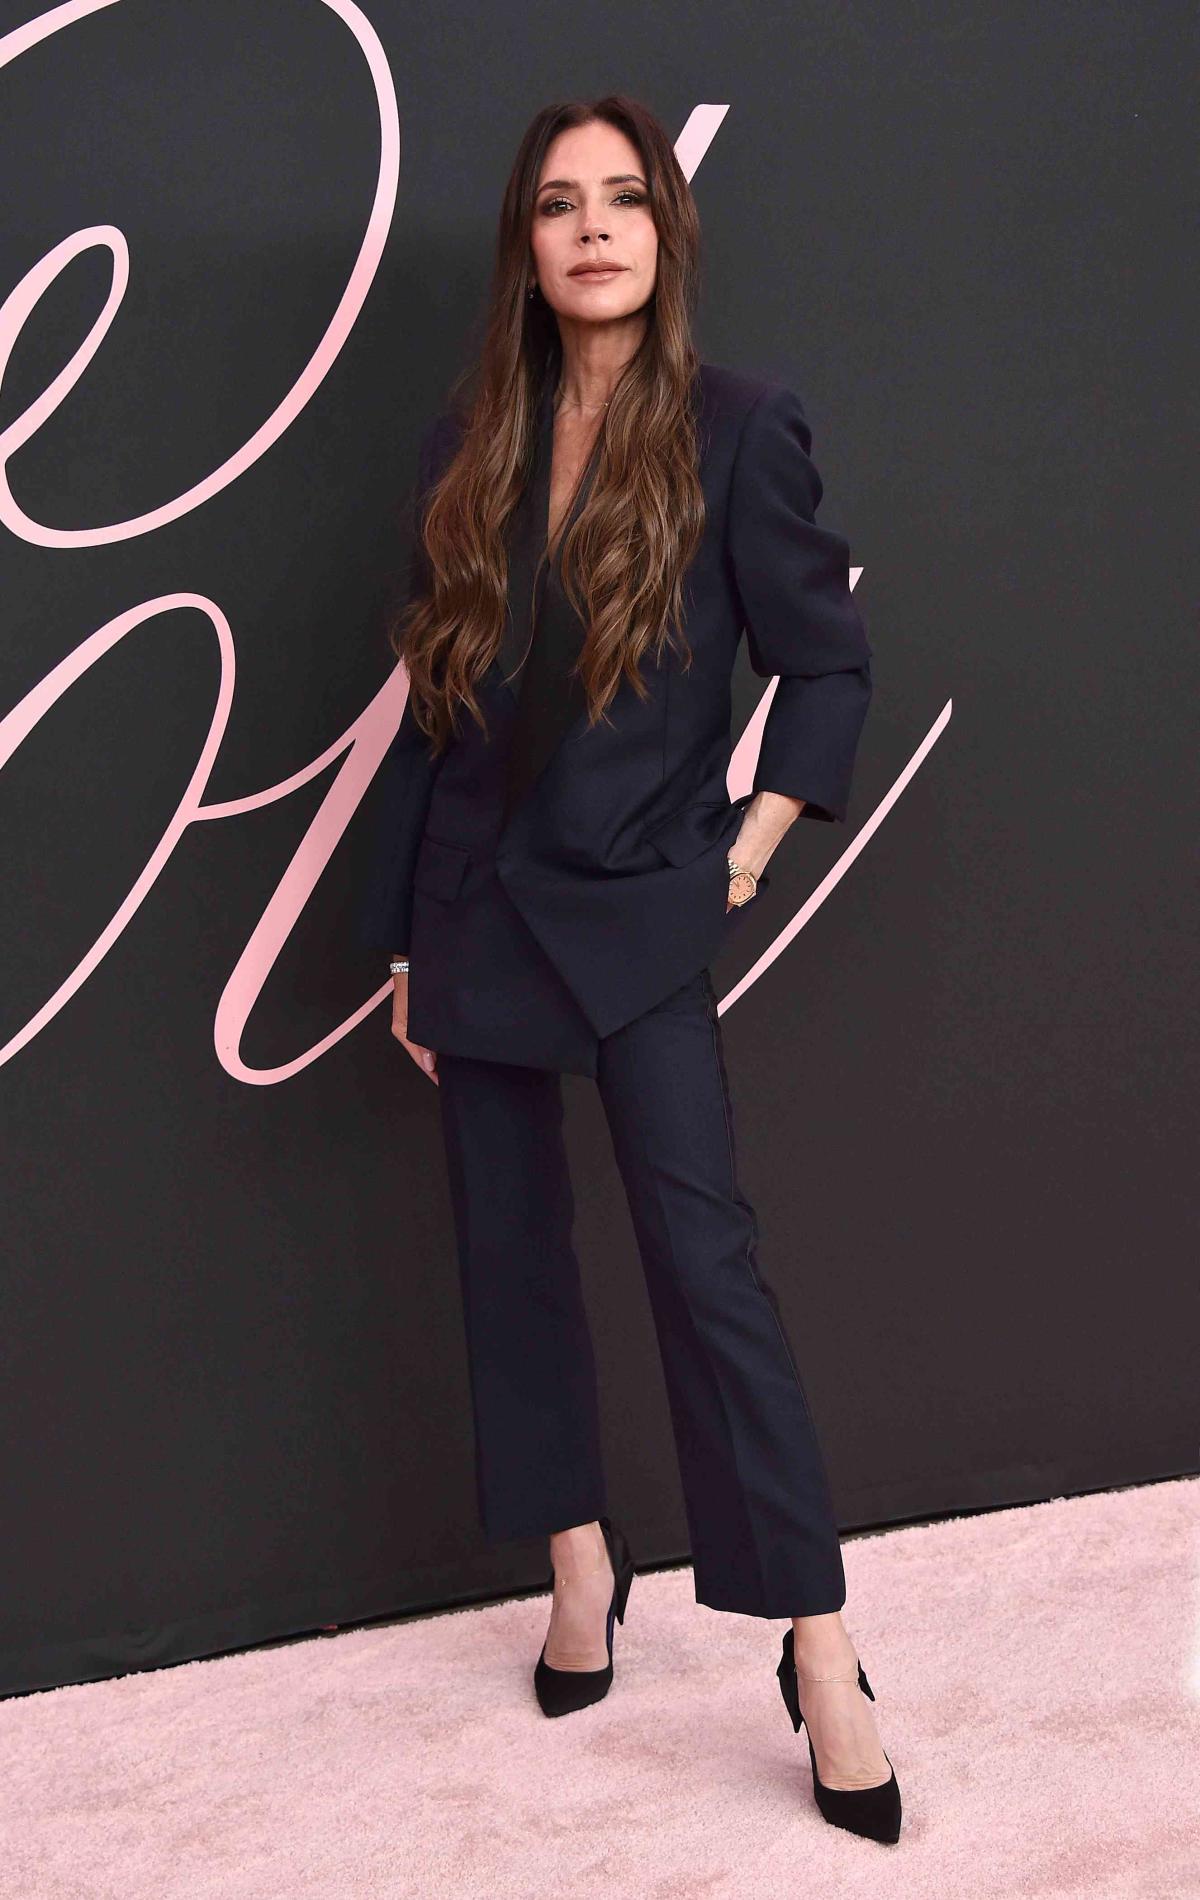 NEW YORK, NY - MAY 17: Model Gigi Hadid earring pants that are way